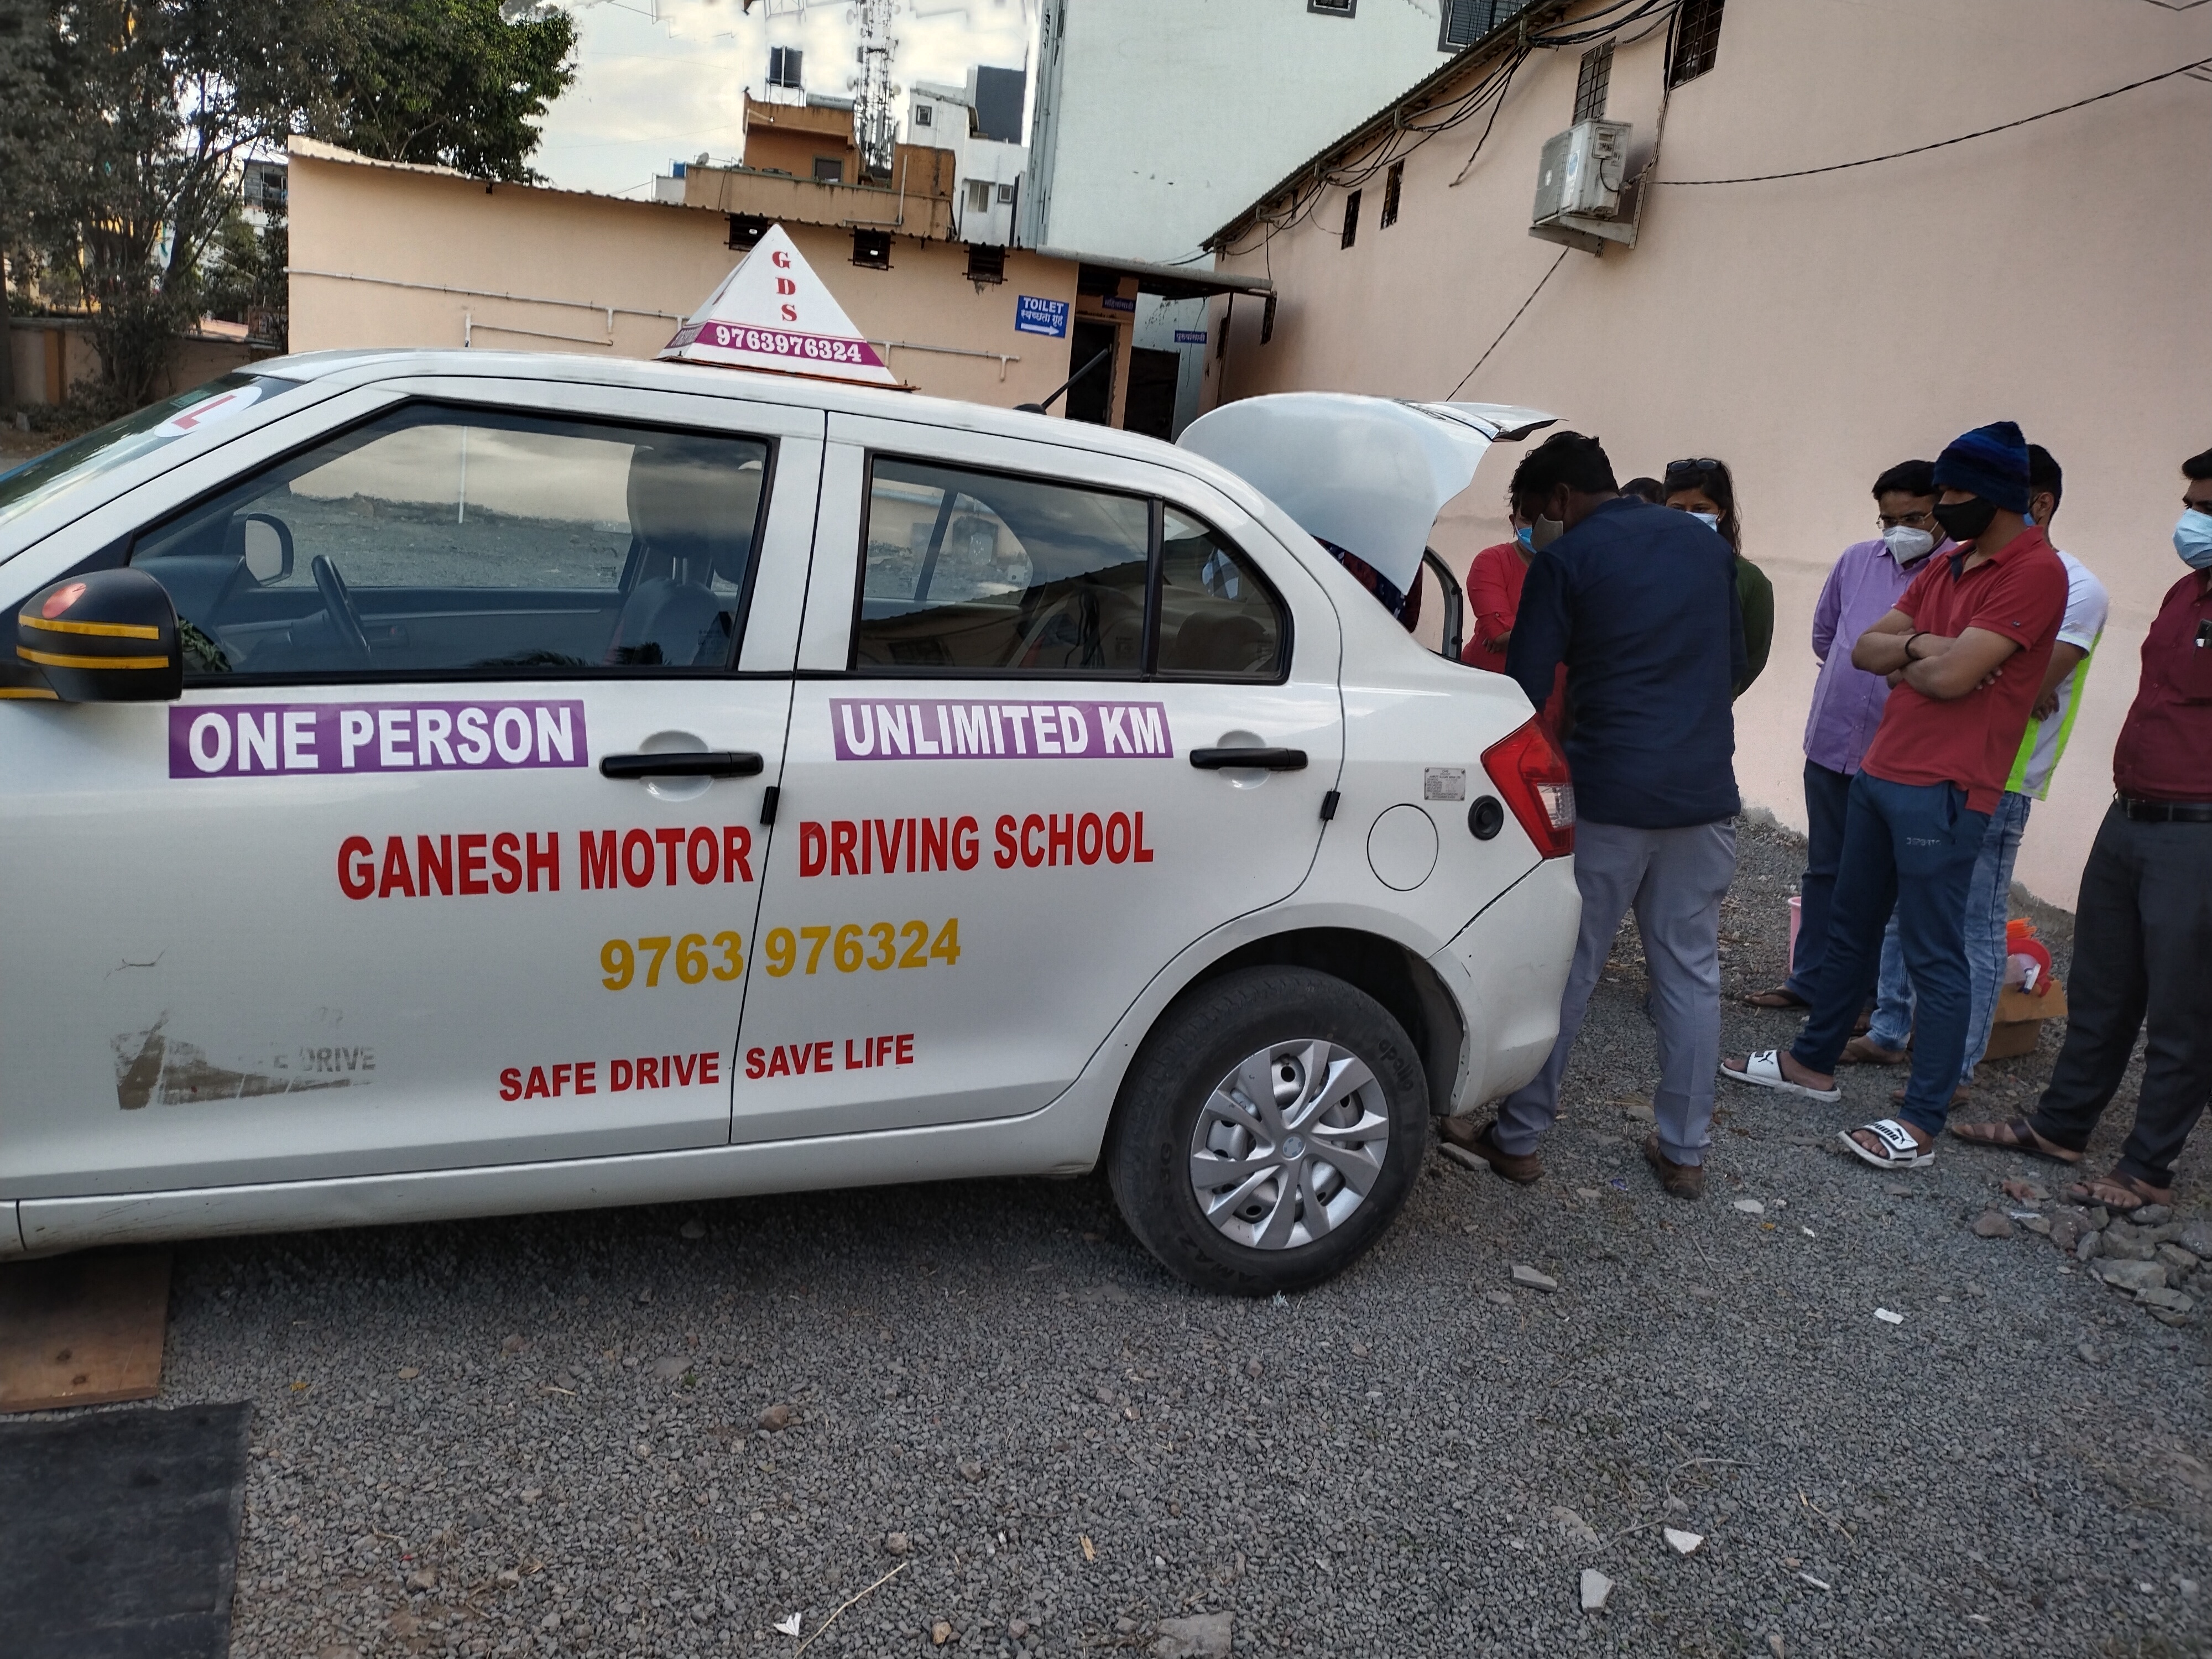 Ganesh Motor Driving School